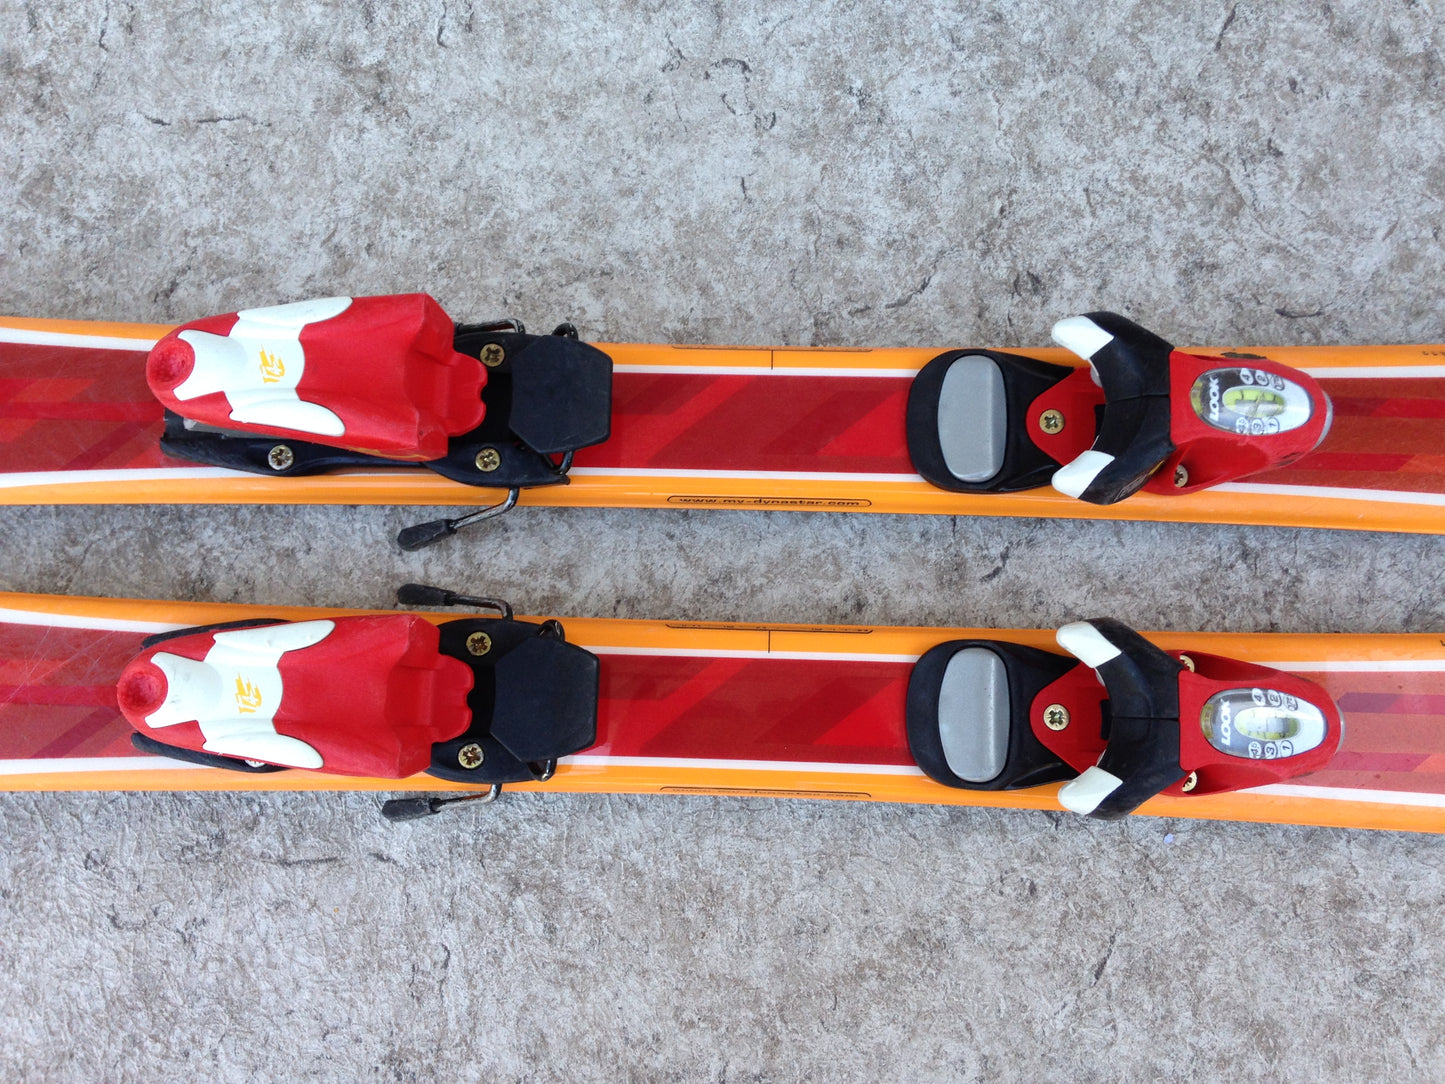 Ski 110 Dynastar Cross Team Parabolic Red Orange With Bindings Excellent